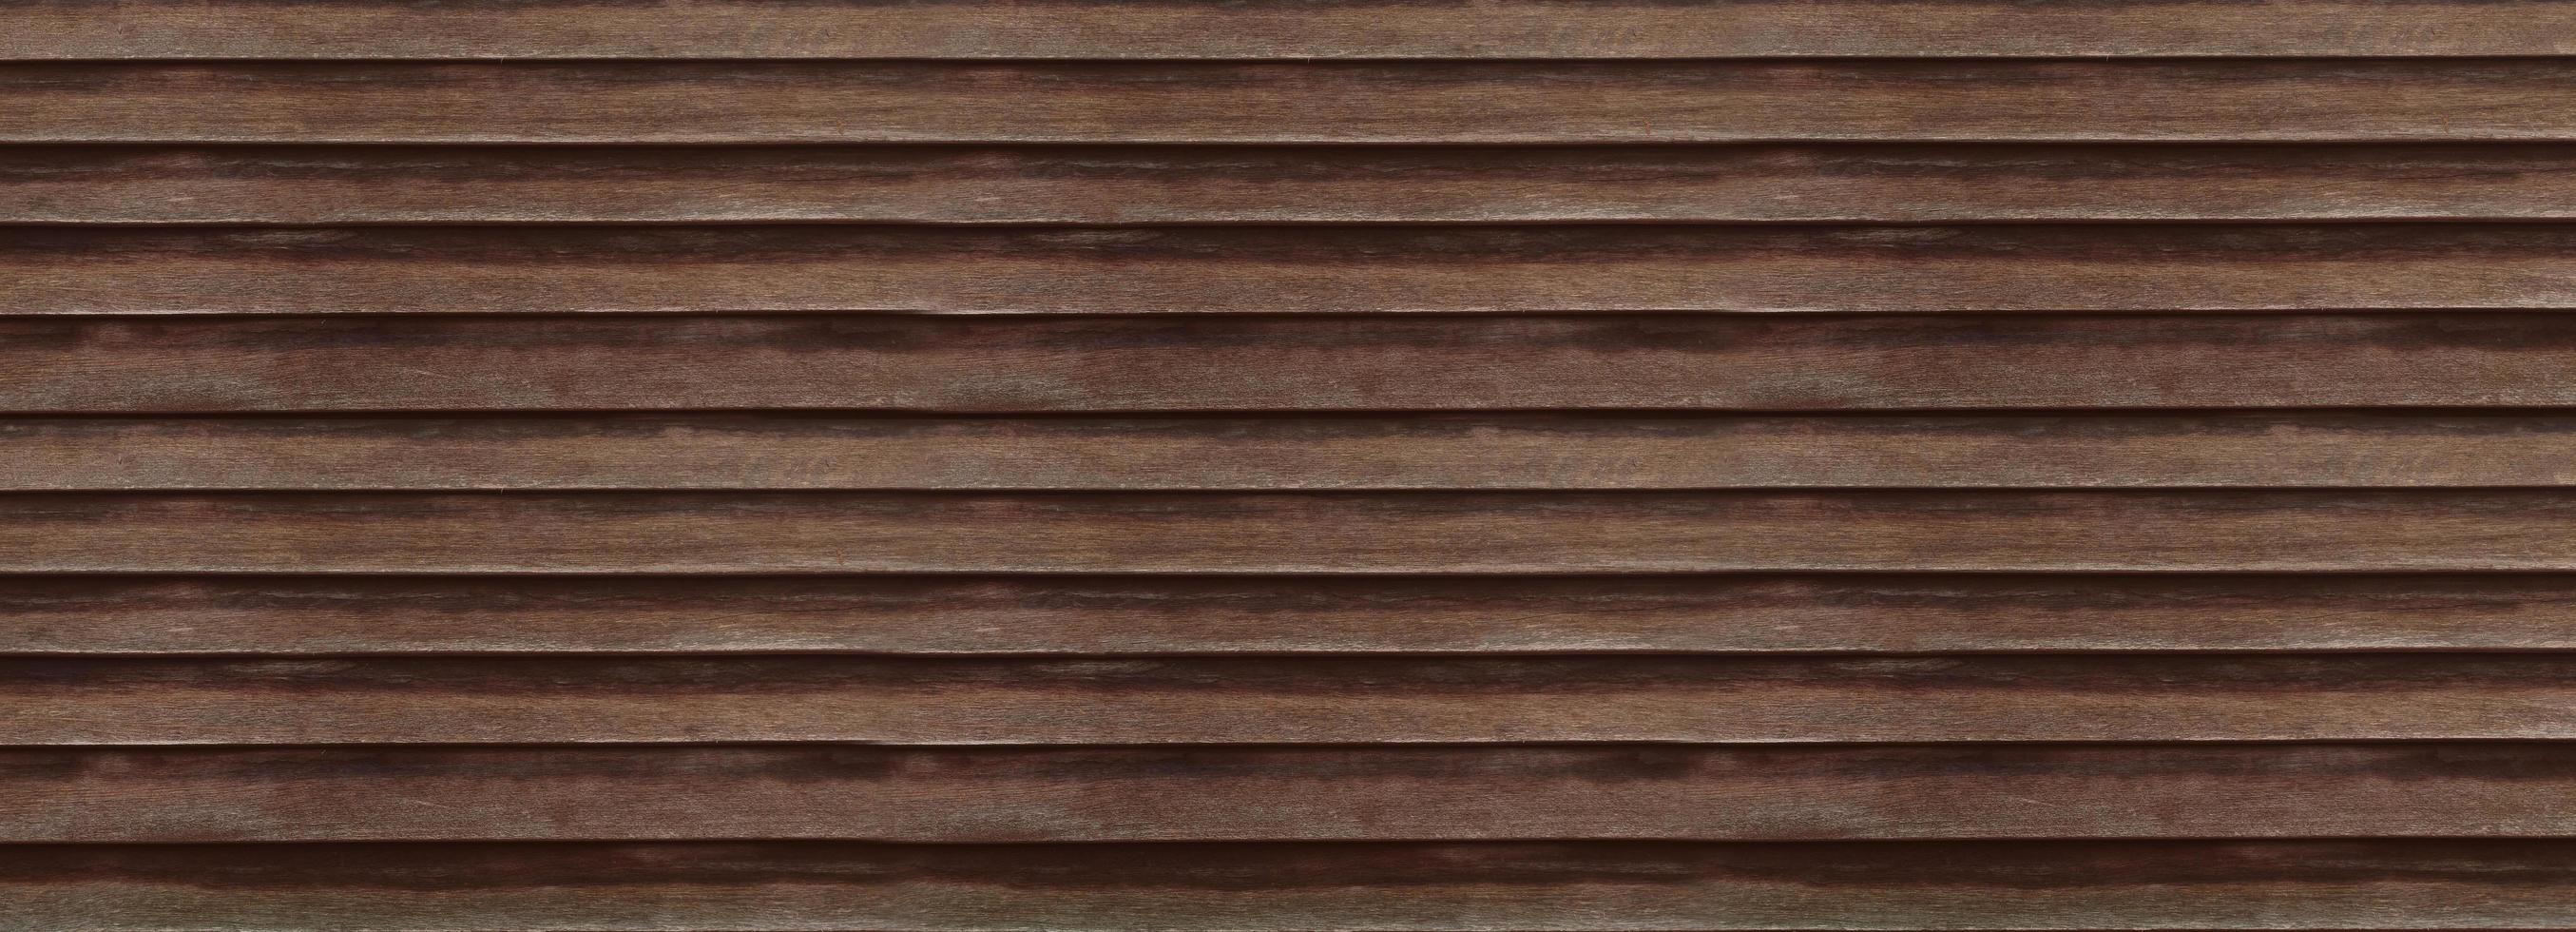 The Old dark wooden texture pattern background photo